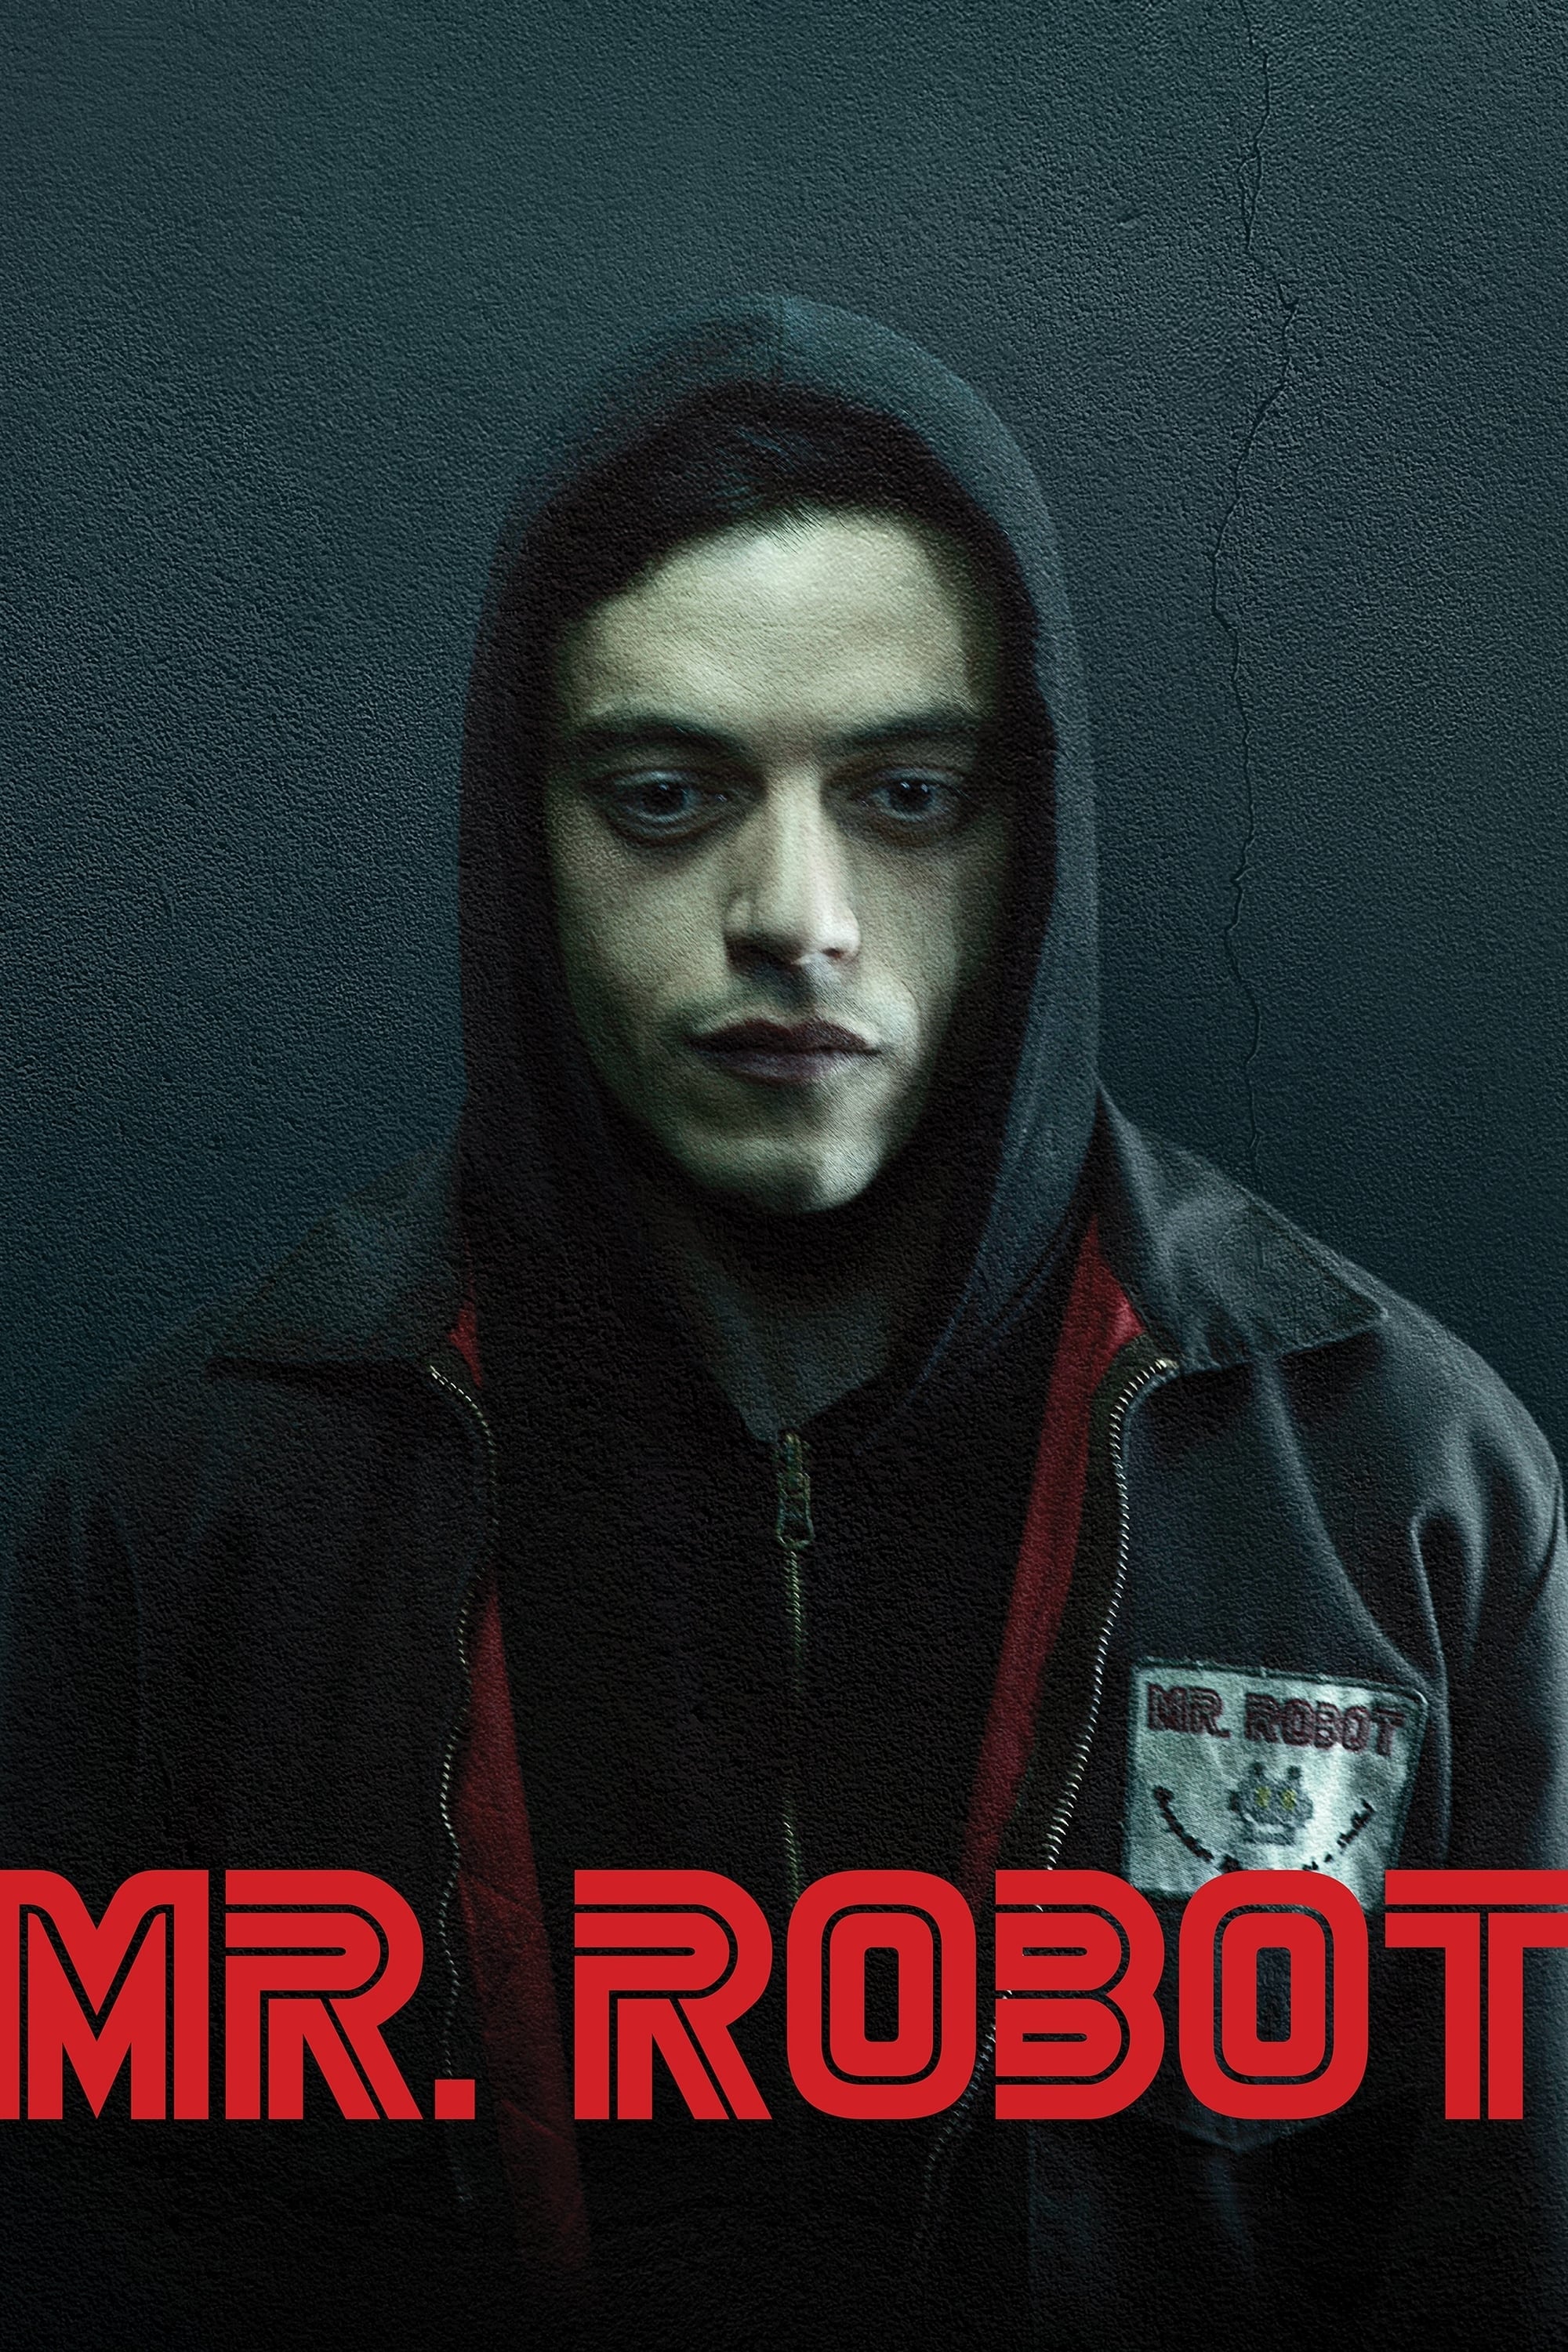 Mr. Robot Season 2